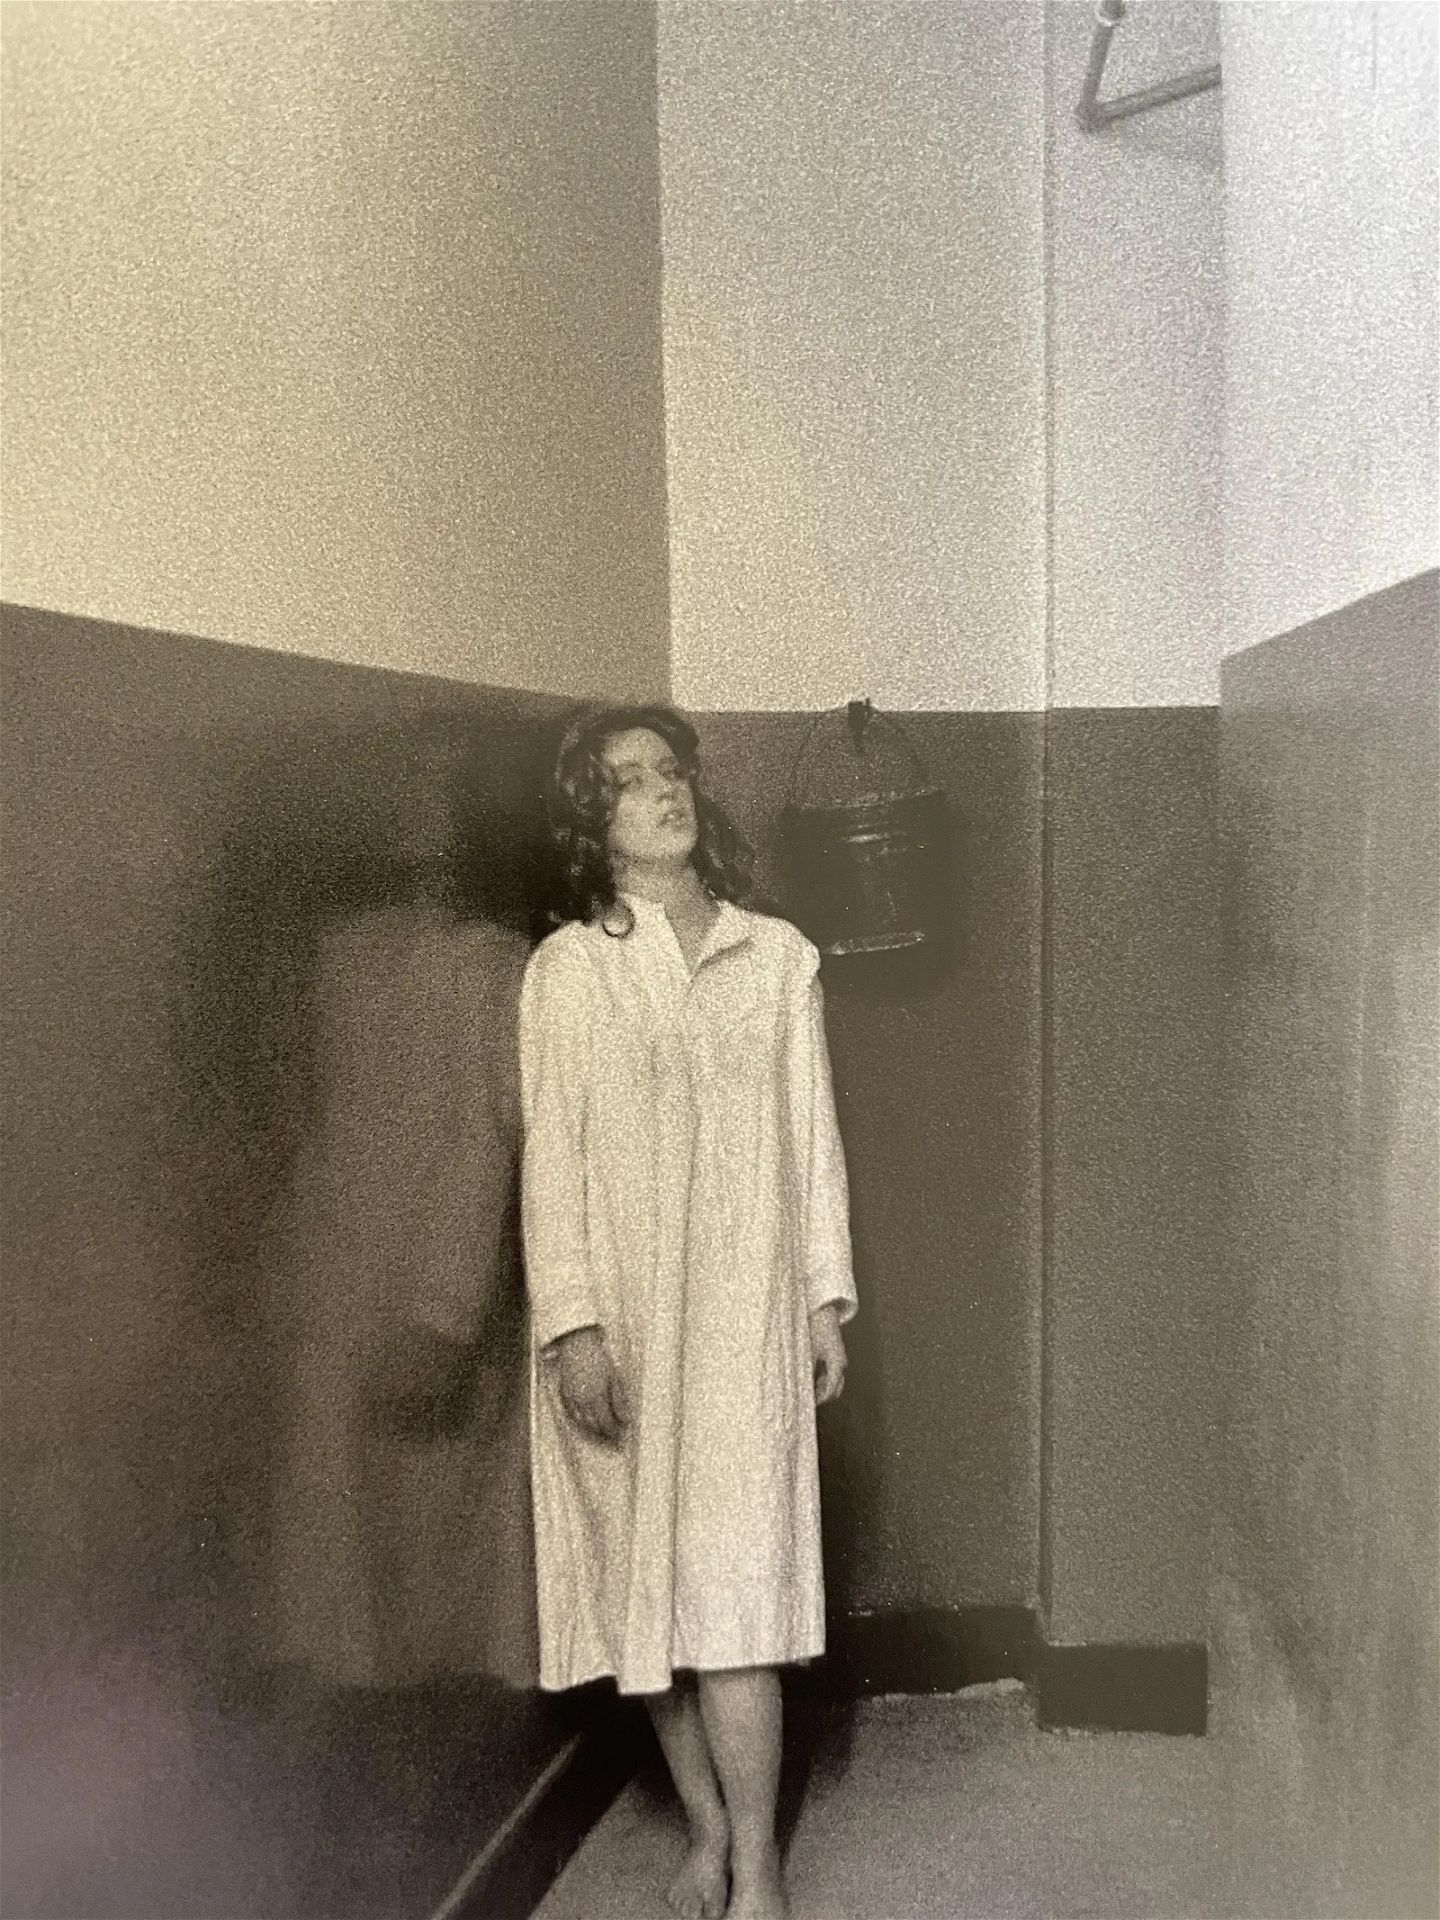 Cindy Sherman "Untitled, 1979" Print - Image 3 of 5